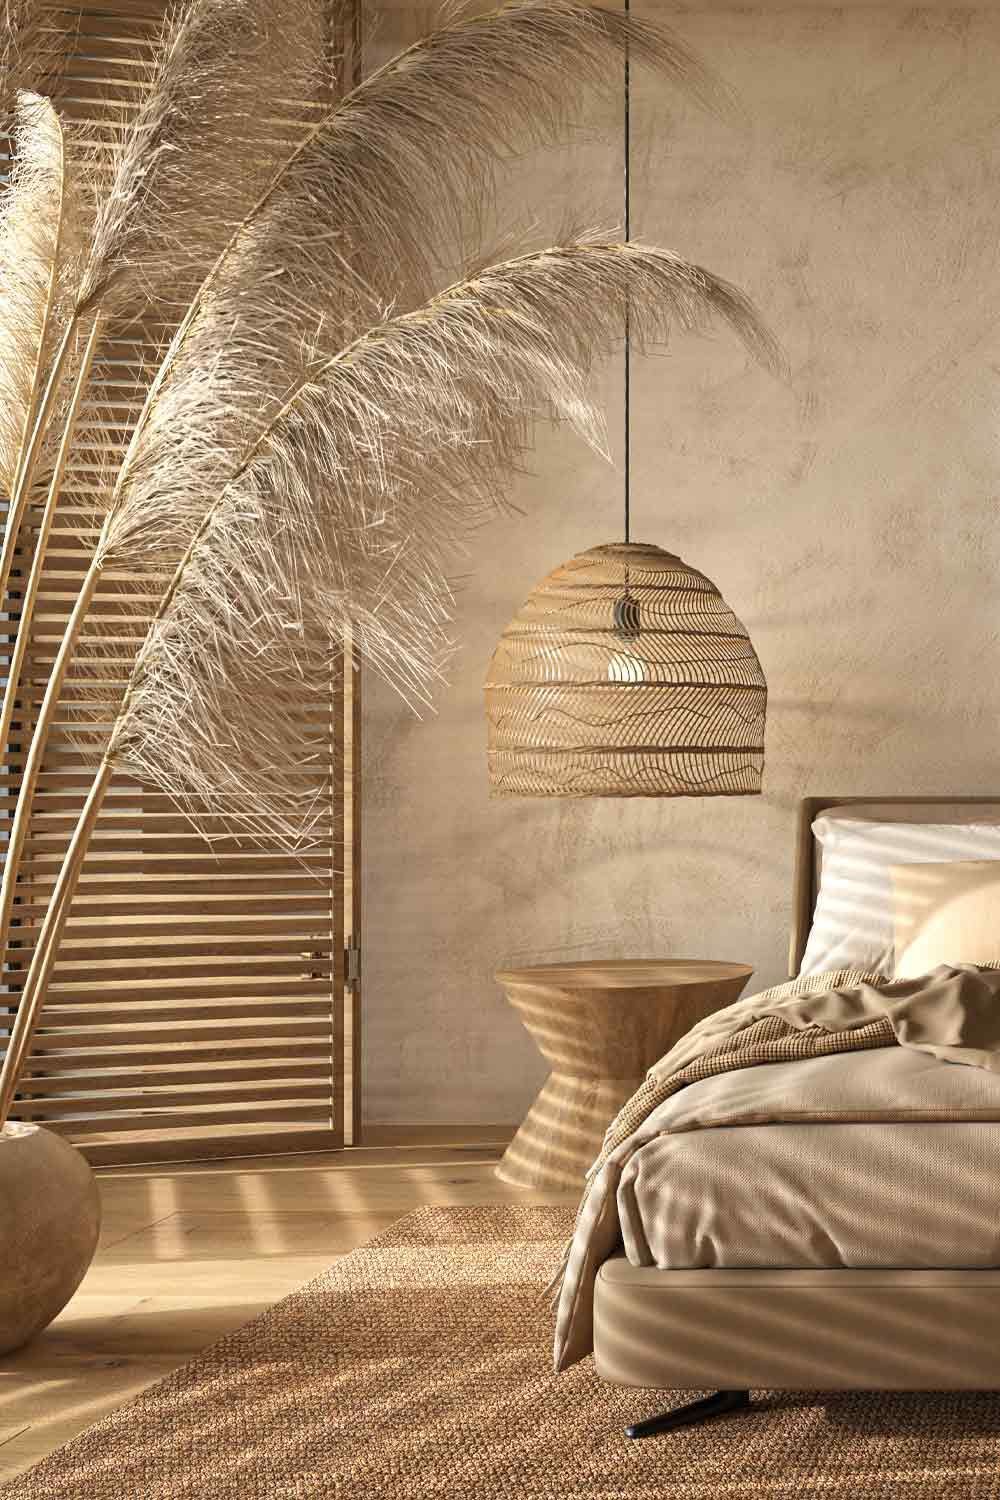 Bedroom lighting ideas